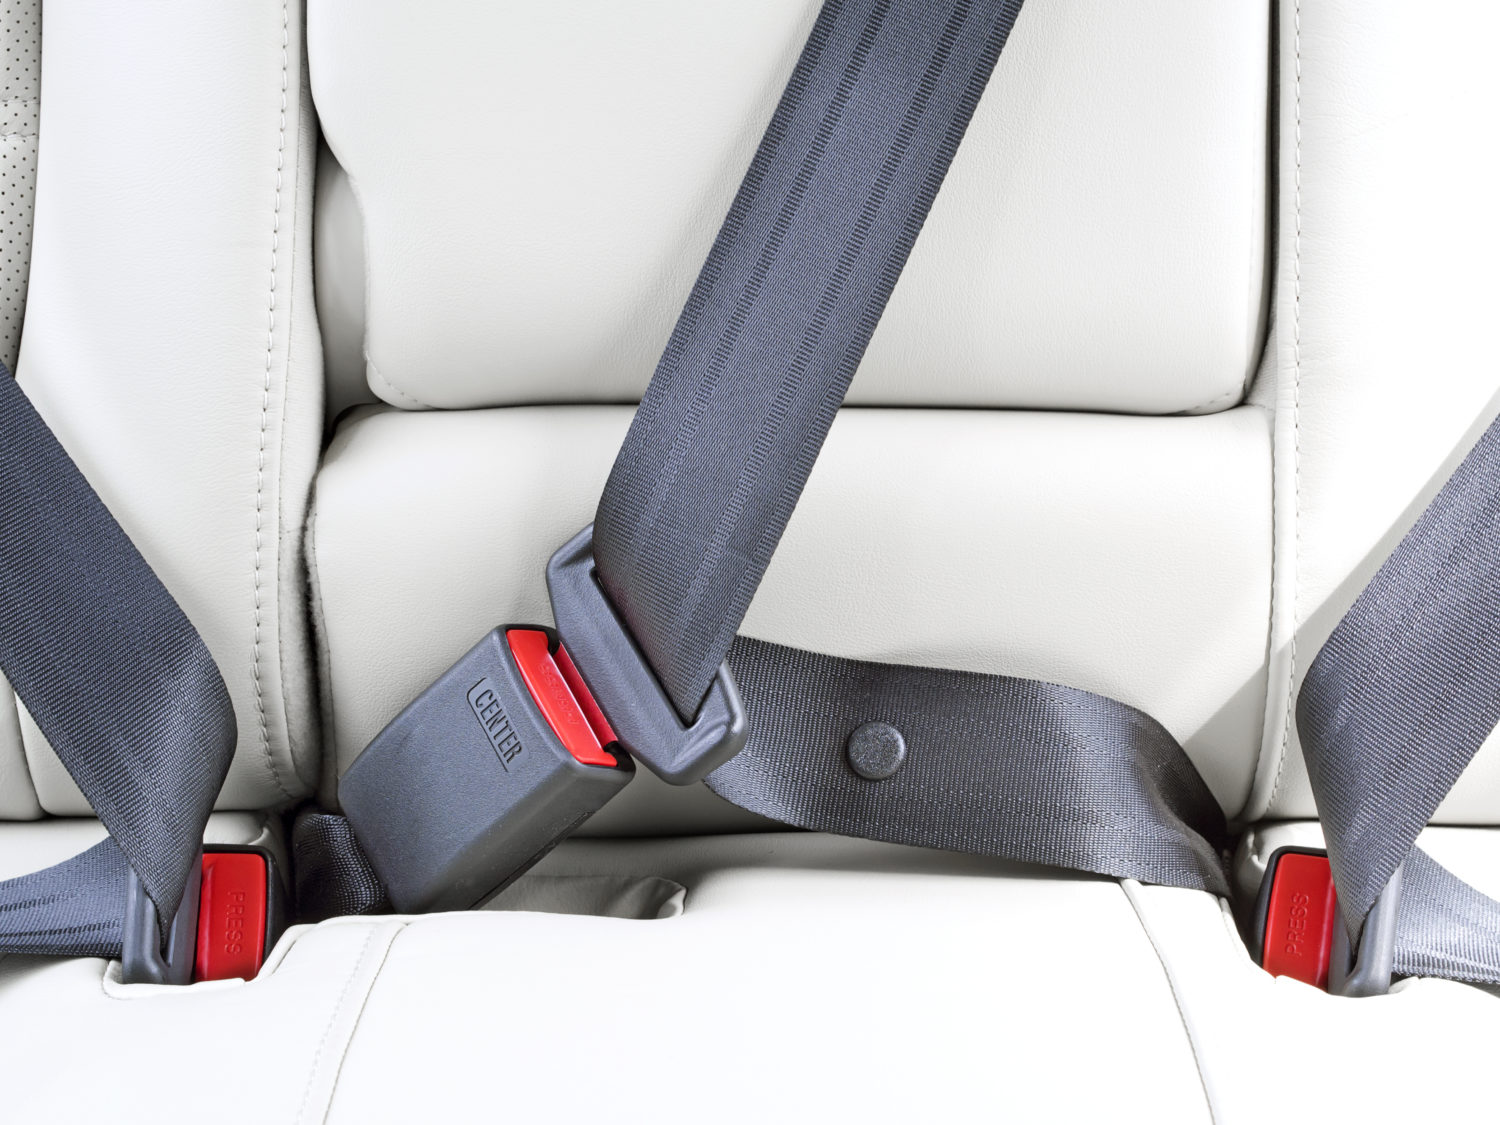 Пассажирский ремень безопасности. Seat Belt, Safety 95.241-210. Wear a Seat Belt. VAG 8 гр., VW, Seat Belt. Ремни безопасности пассажиров задних рядов т4.